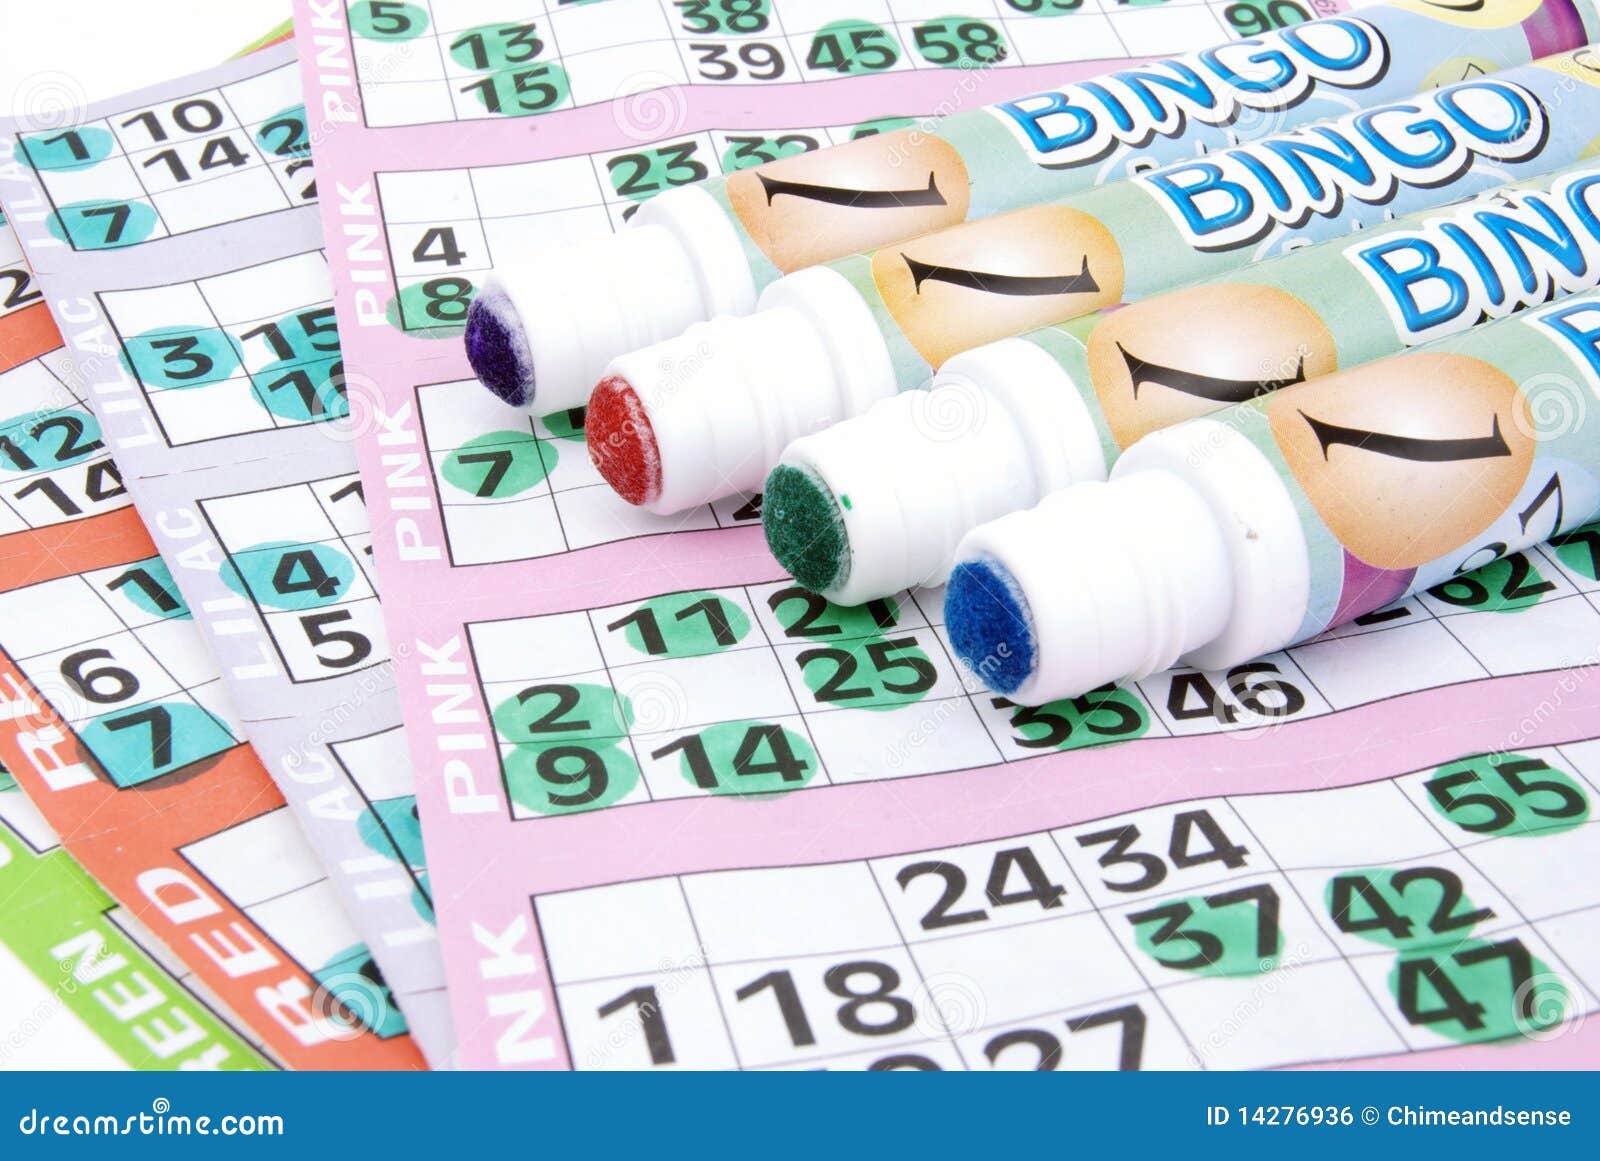 10+ Bingo Daubers Stock Photos, Pictures & Royalty-Free Images - iStock